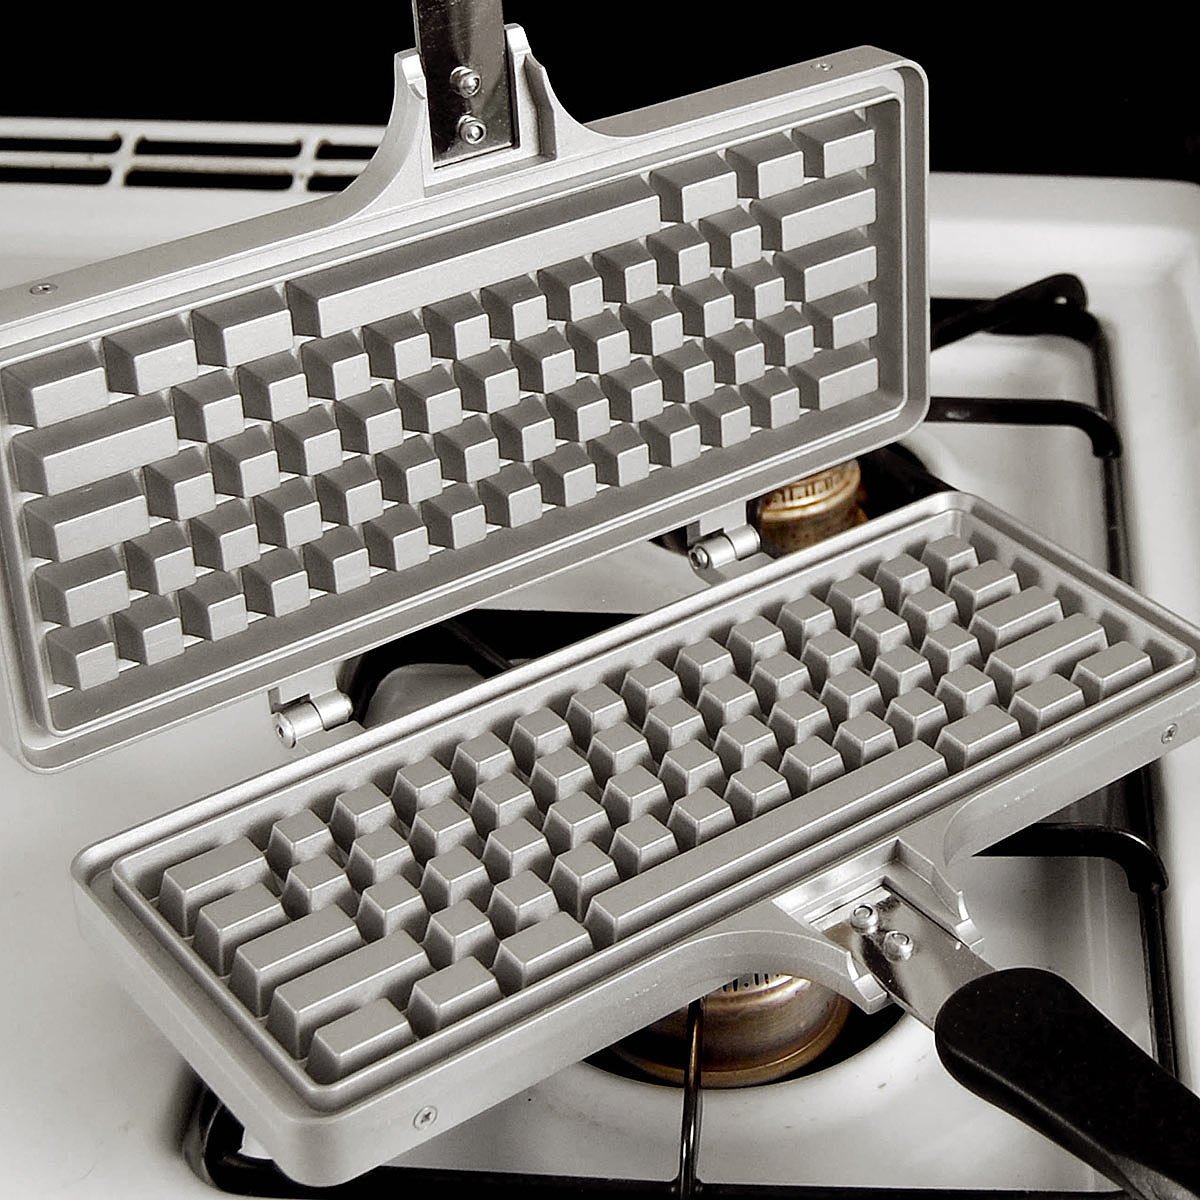 Keyboard Waffle Iron | nerdy gadget, waffle iron | UncommonGoods